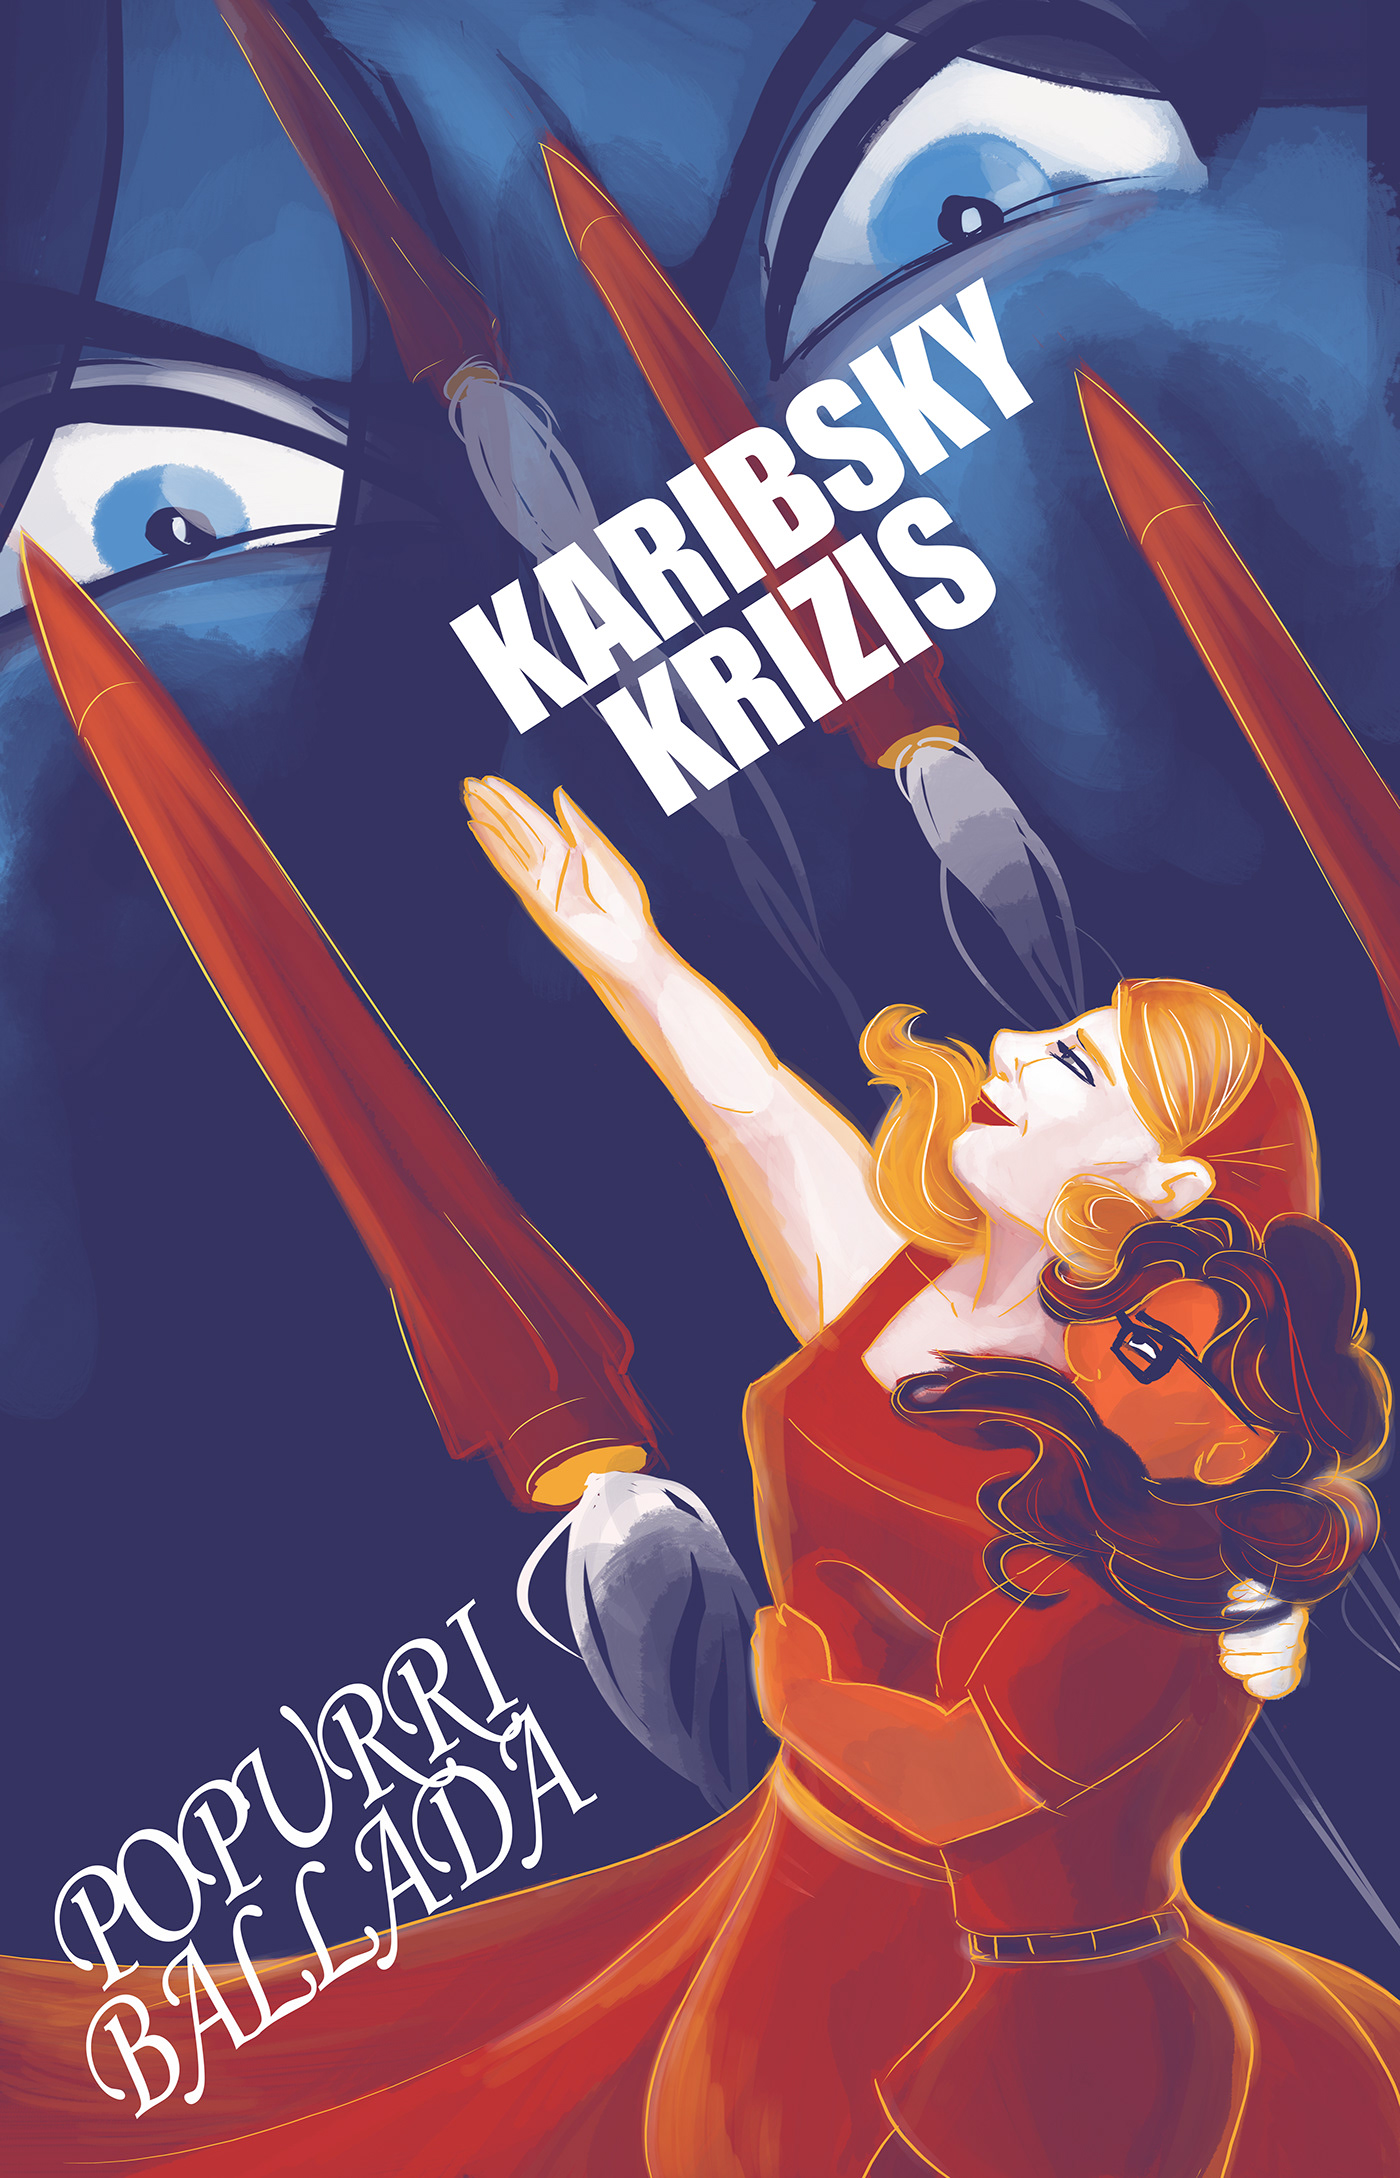 posters cuban mssle crisis nuclear war Russia cuba america 1960s propoganda posters horror movie poster carnival poster